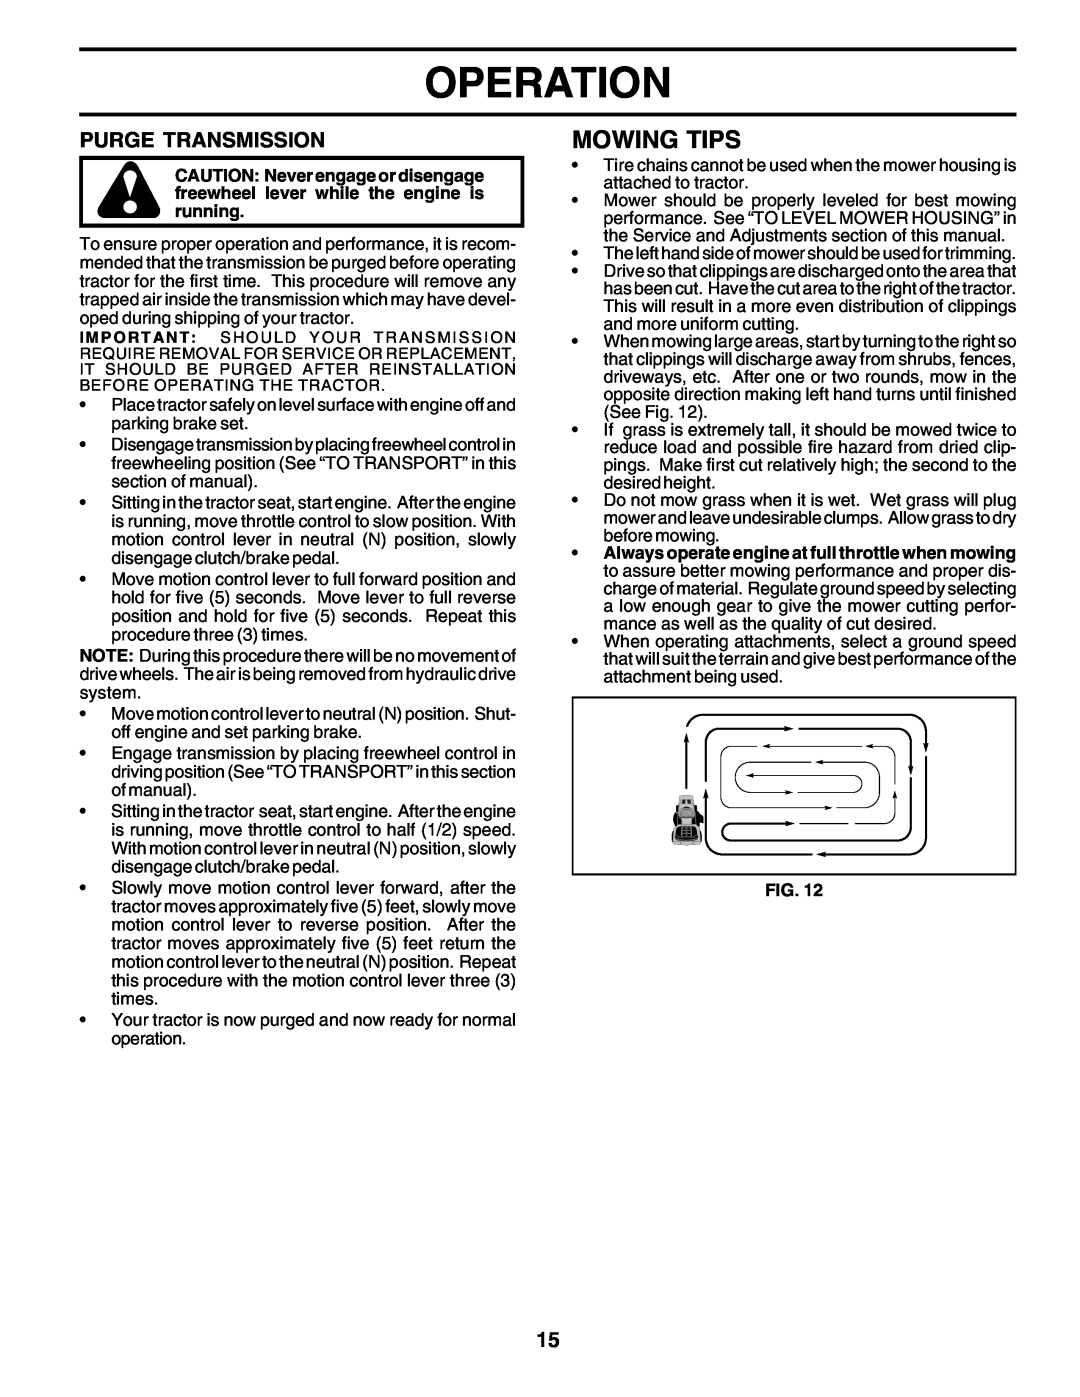 Poulan 176873 owner manual Mowing Tips, Operation, Purge Transmission 